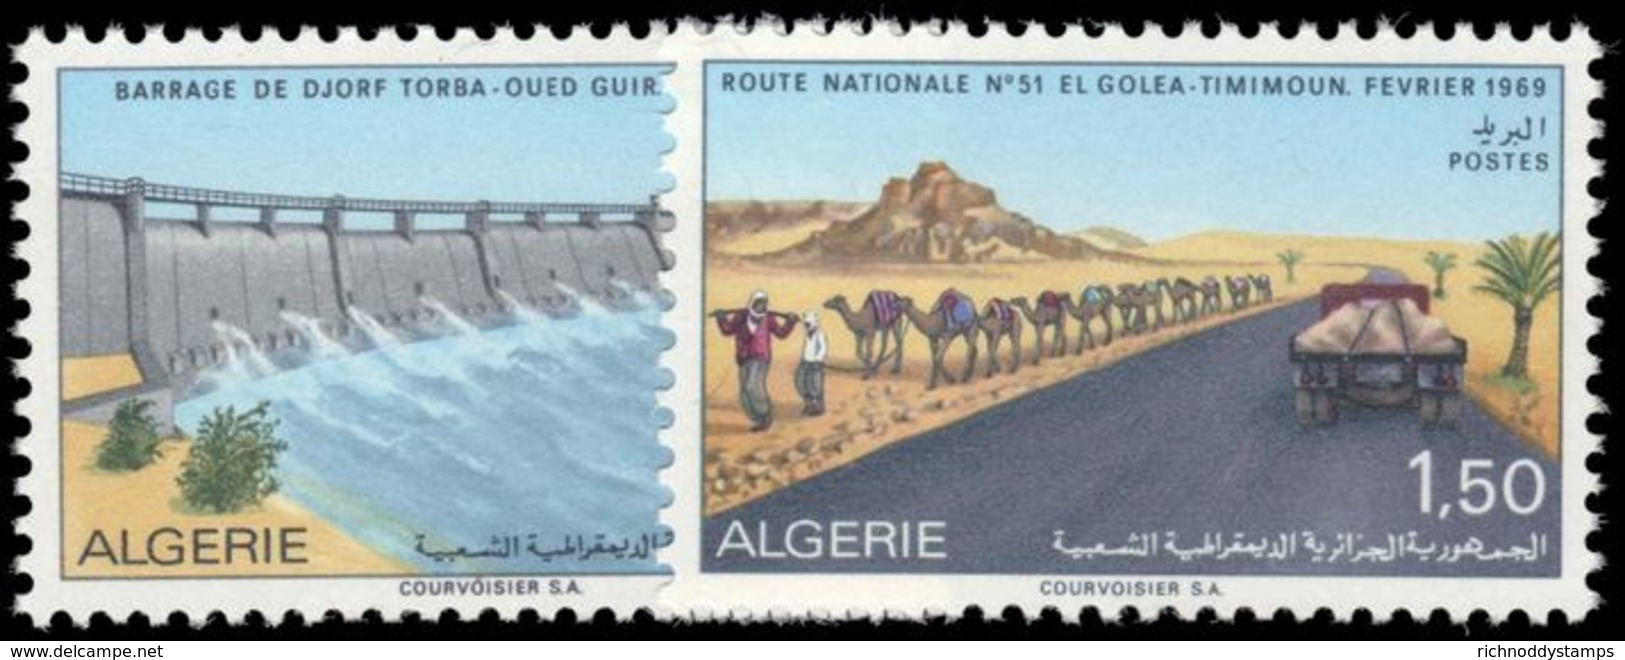 Algeria 1969 Saharan Public Works Unmounted Mint. - Algeria (1962-...)